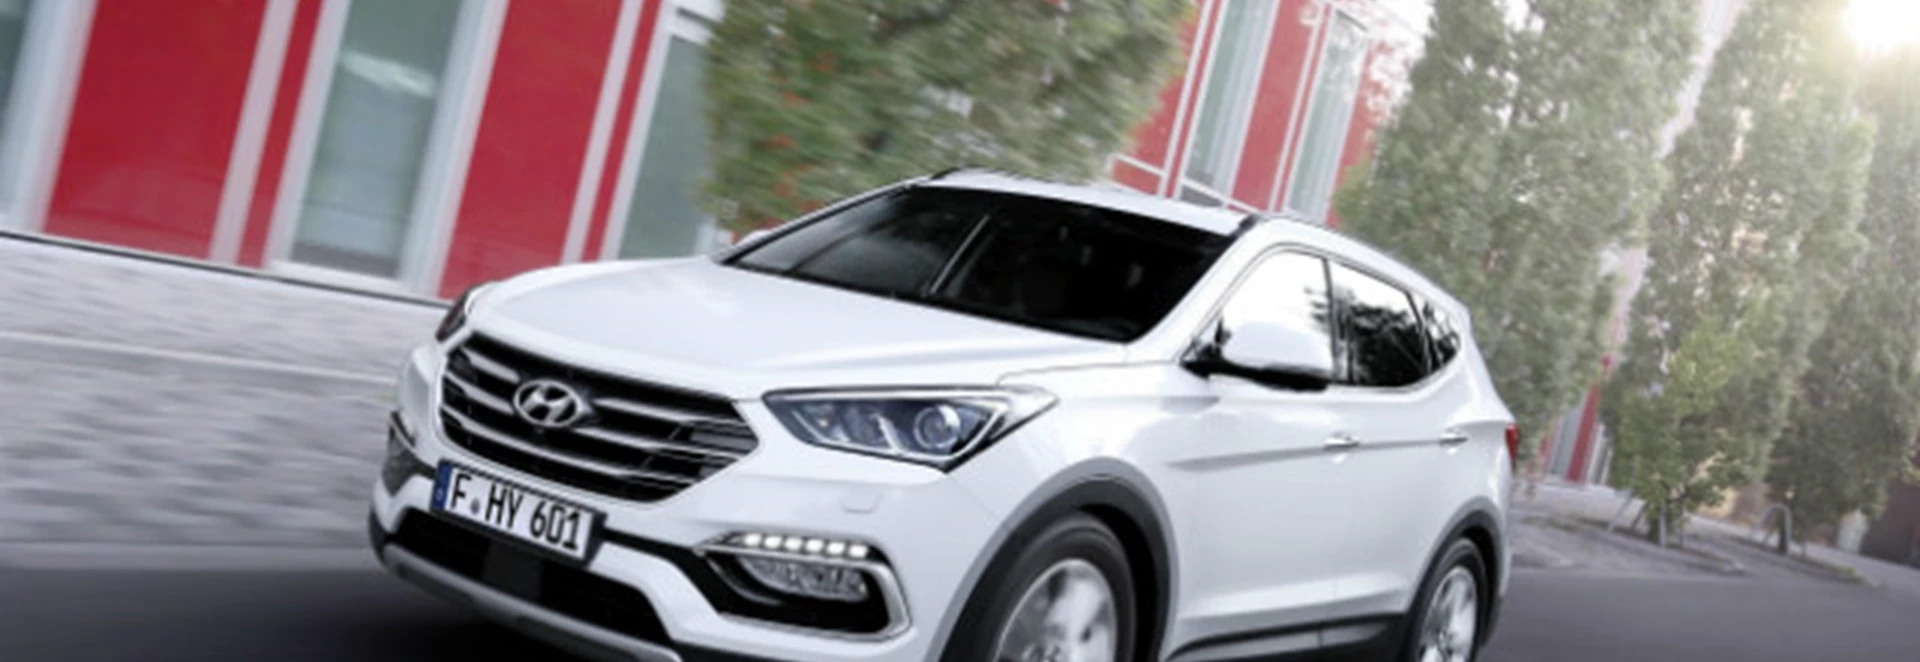 Hyundai unveils updated Santa Fe at Frankfurt